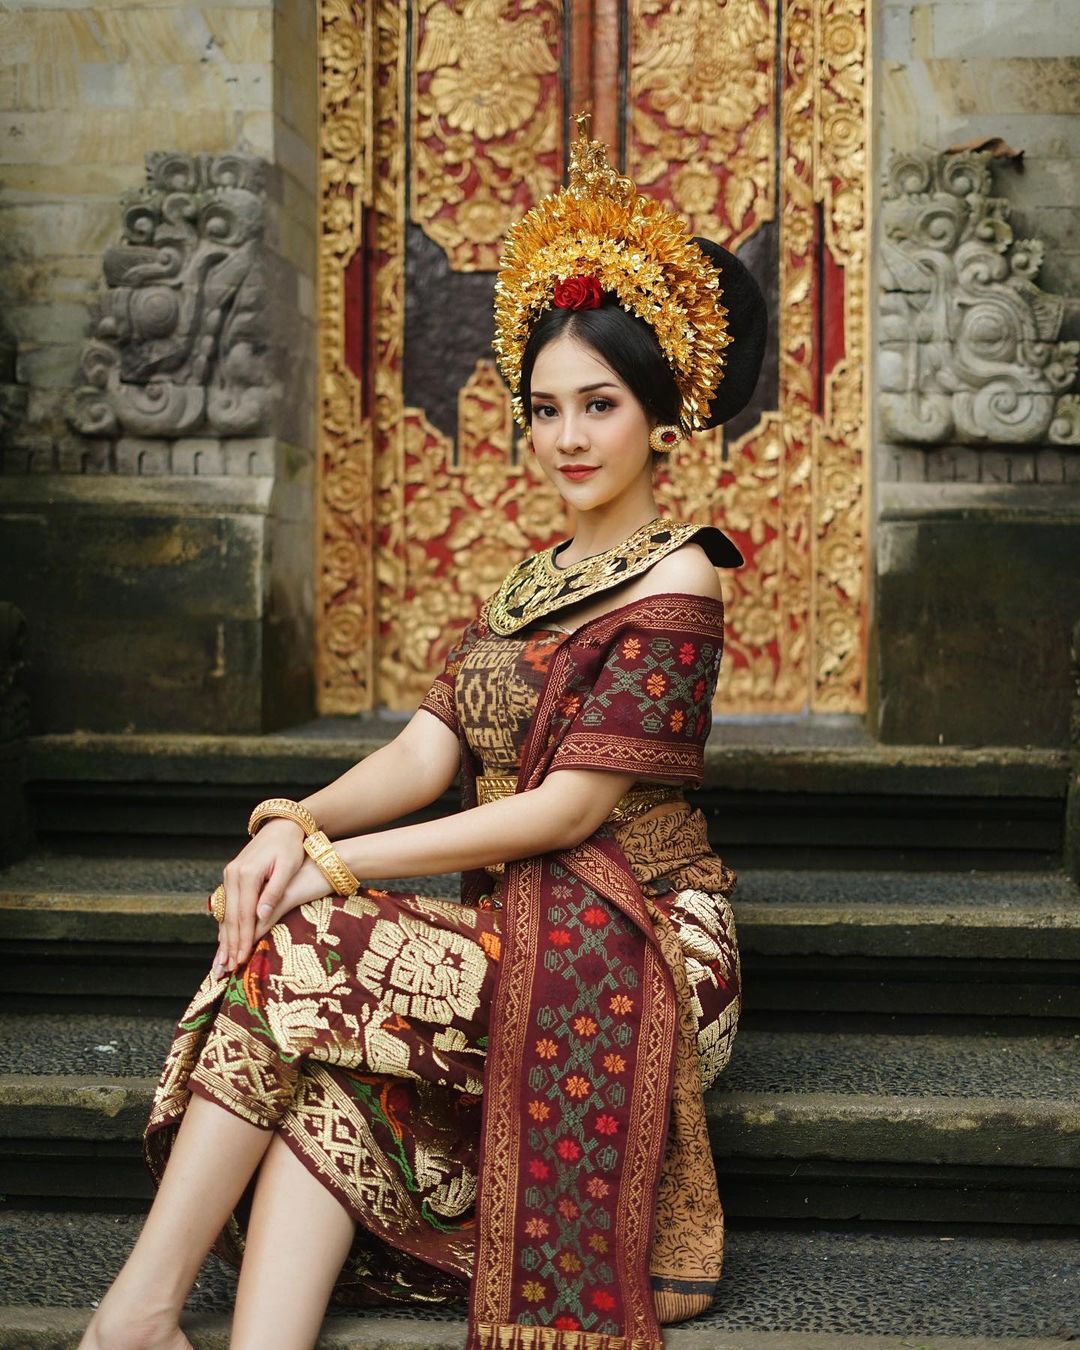 Potret Anya Geraldine dalam Balutan Baju Adat Bali